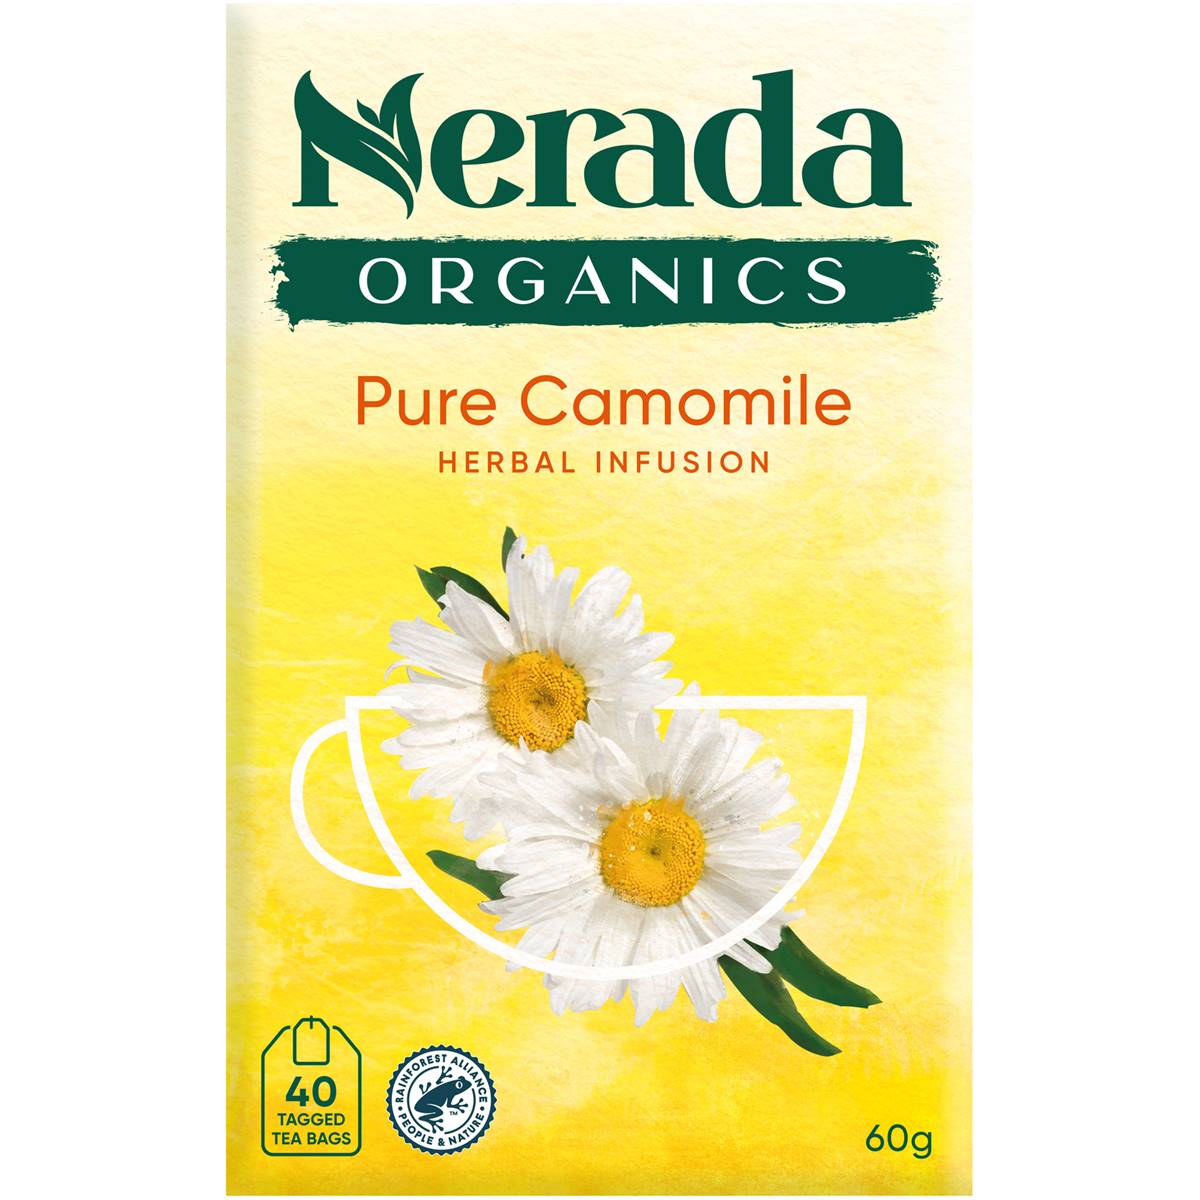 Calories in Nerada Organic Camomile Tea Bags